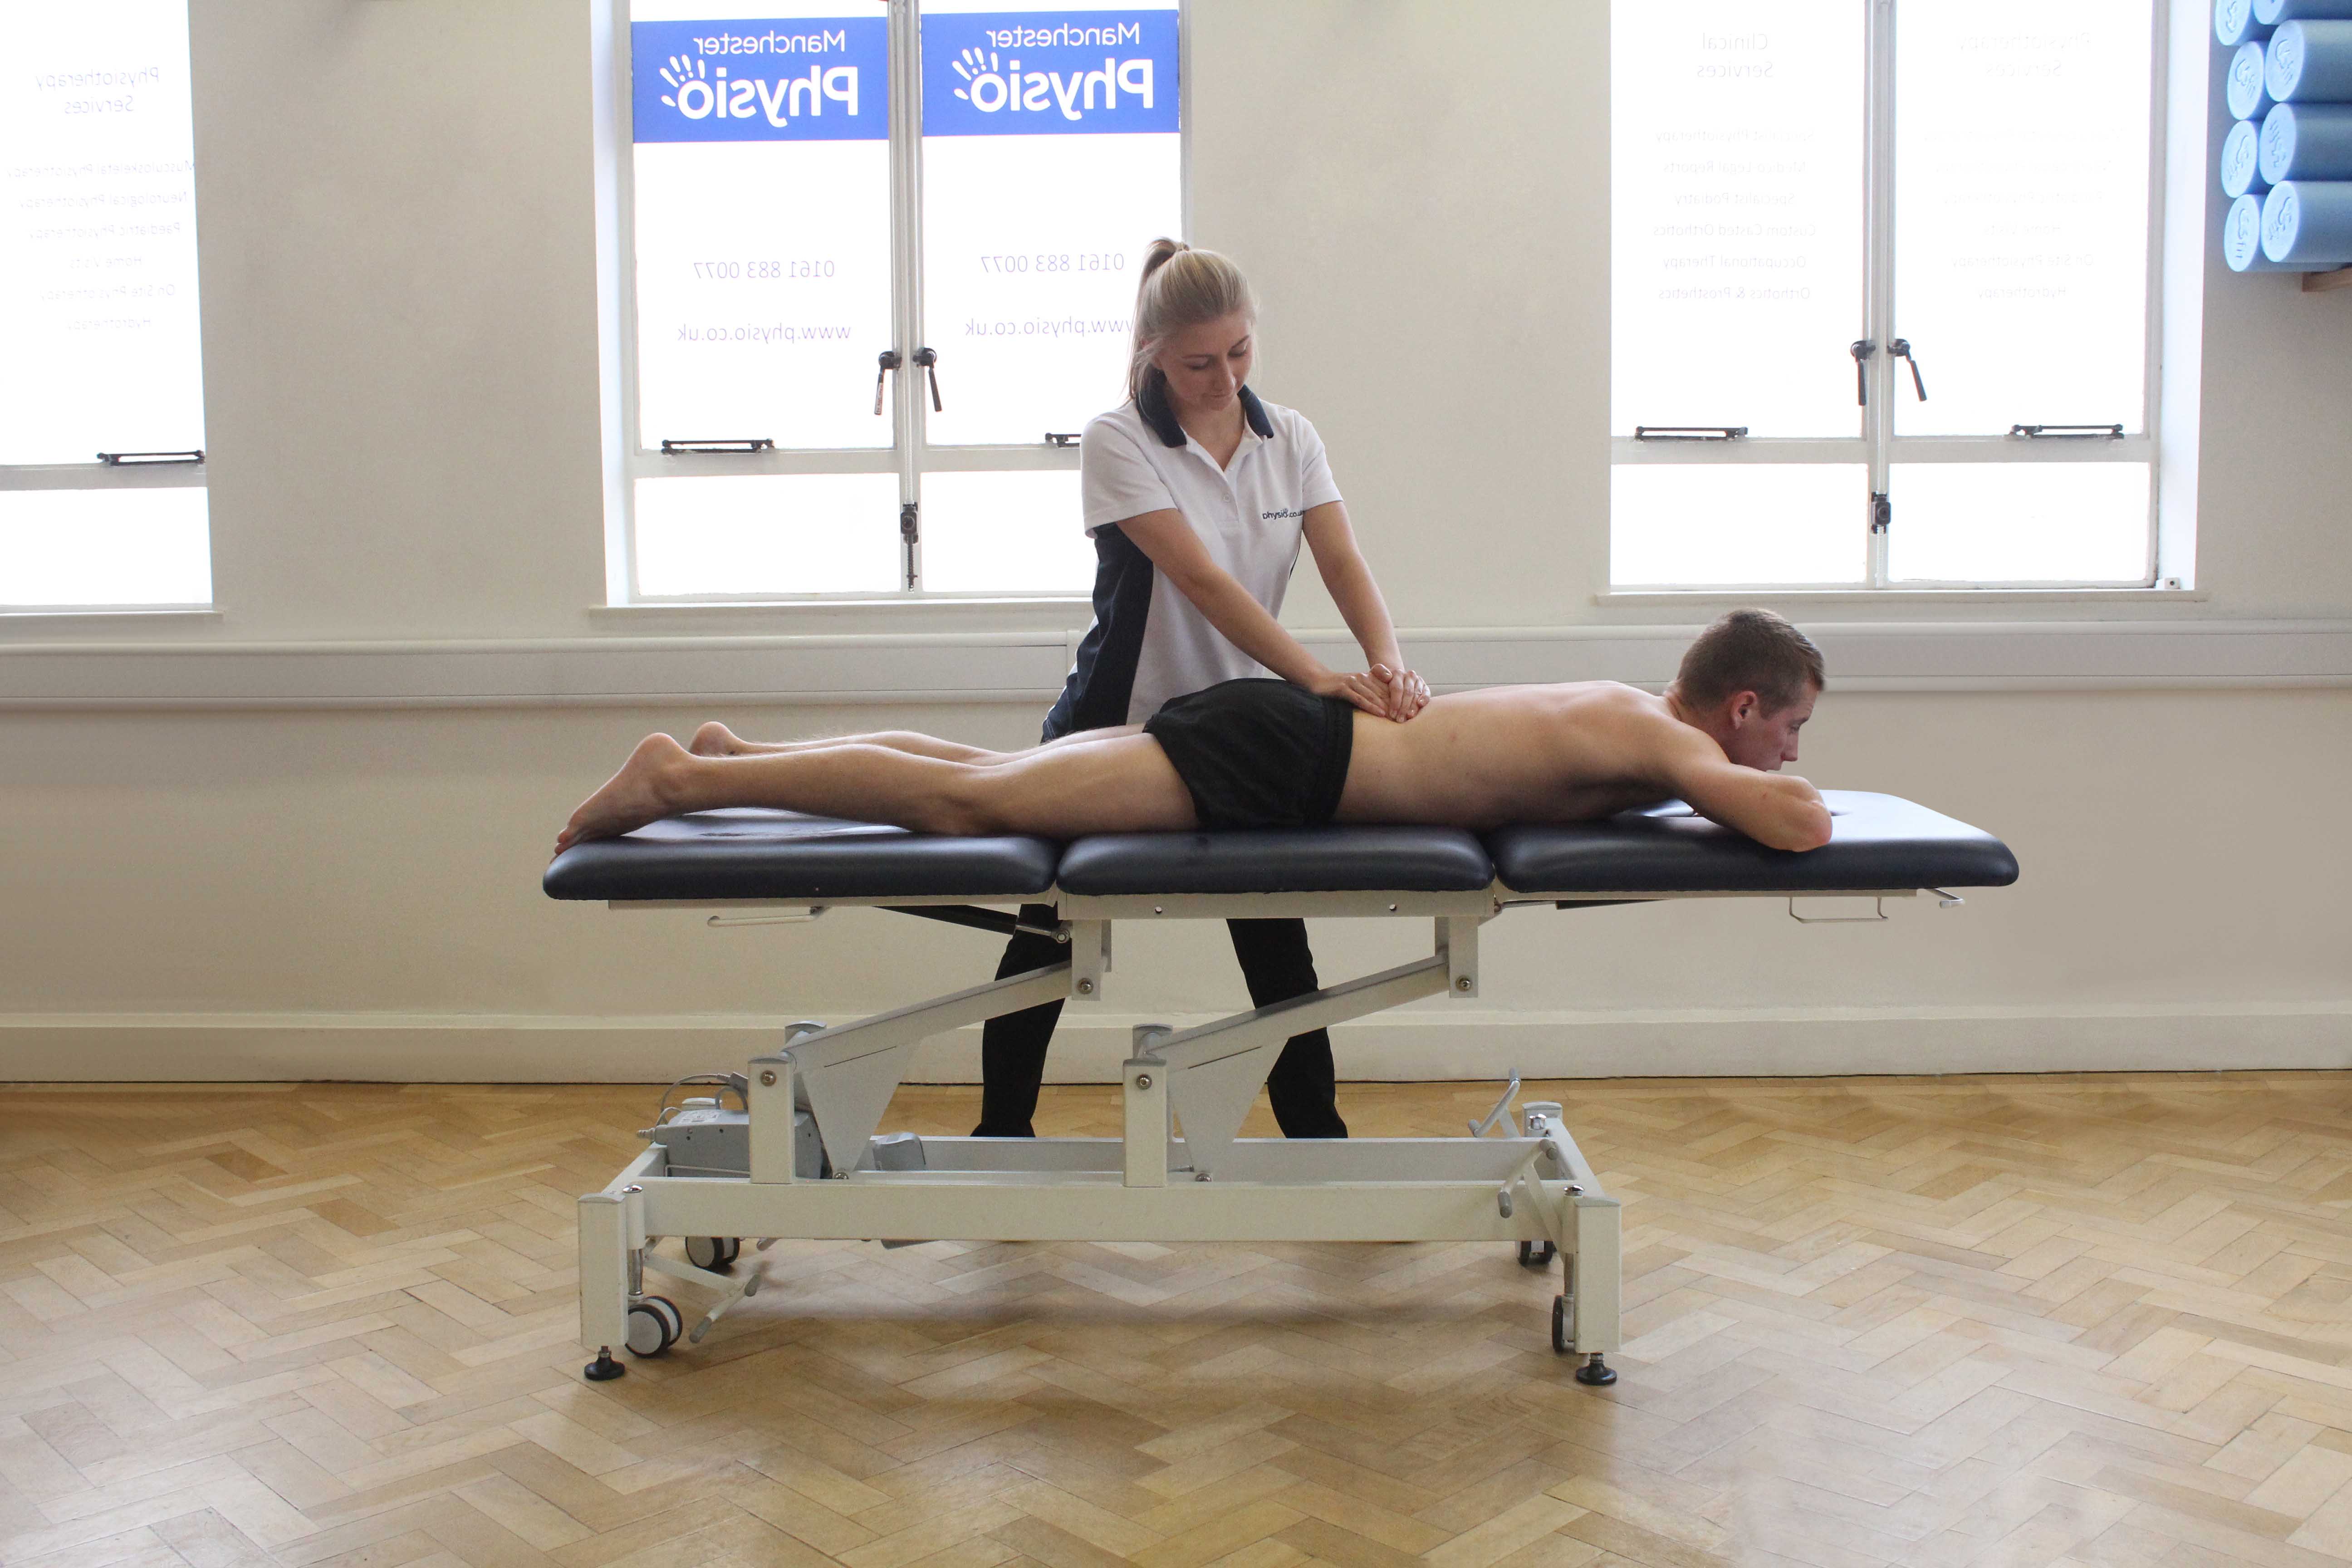 Swedish massage foucsed on lower latissimus and lumbar region